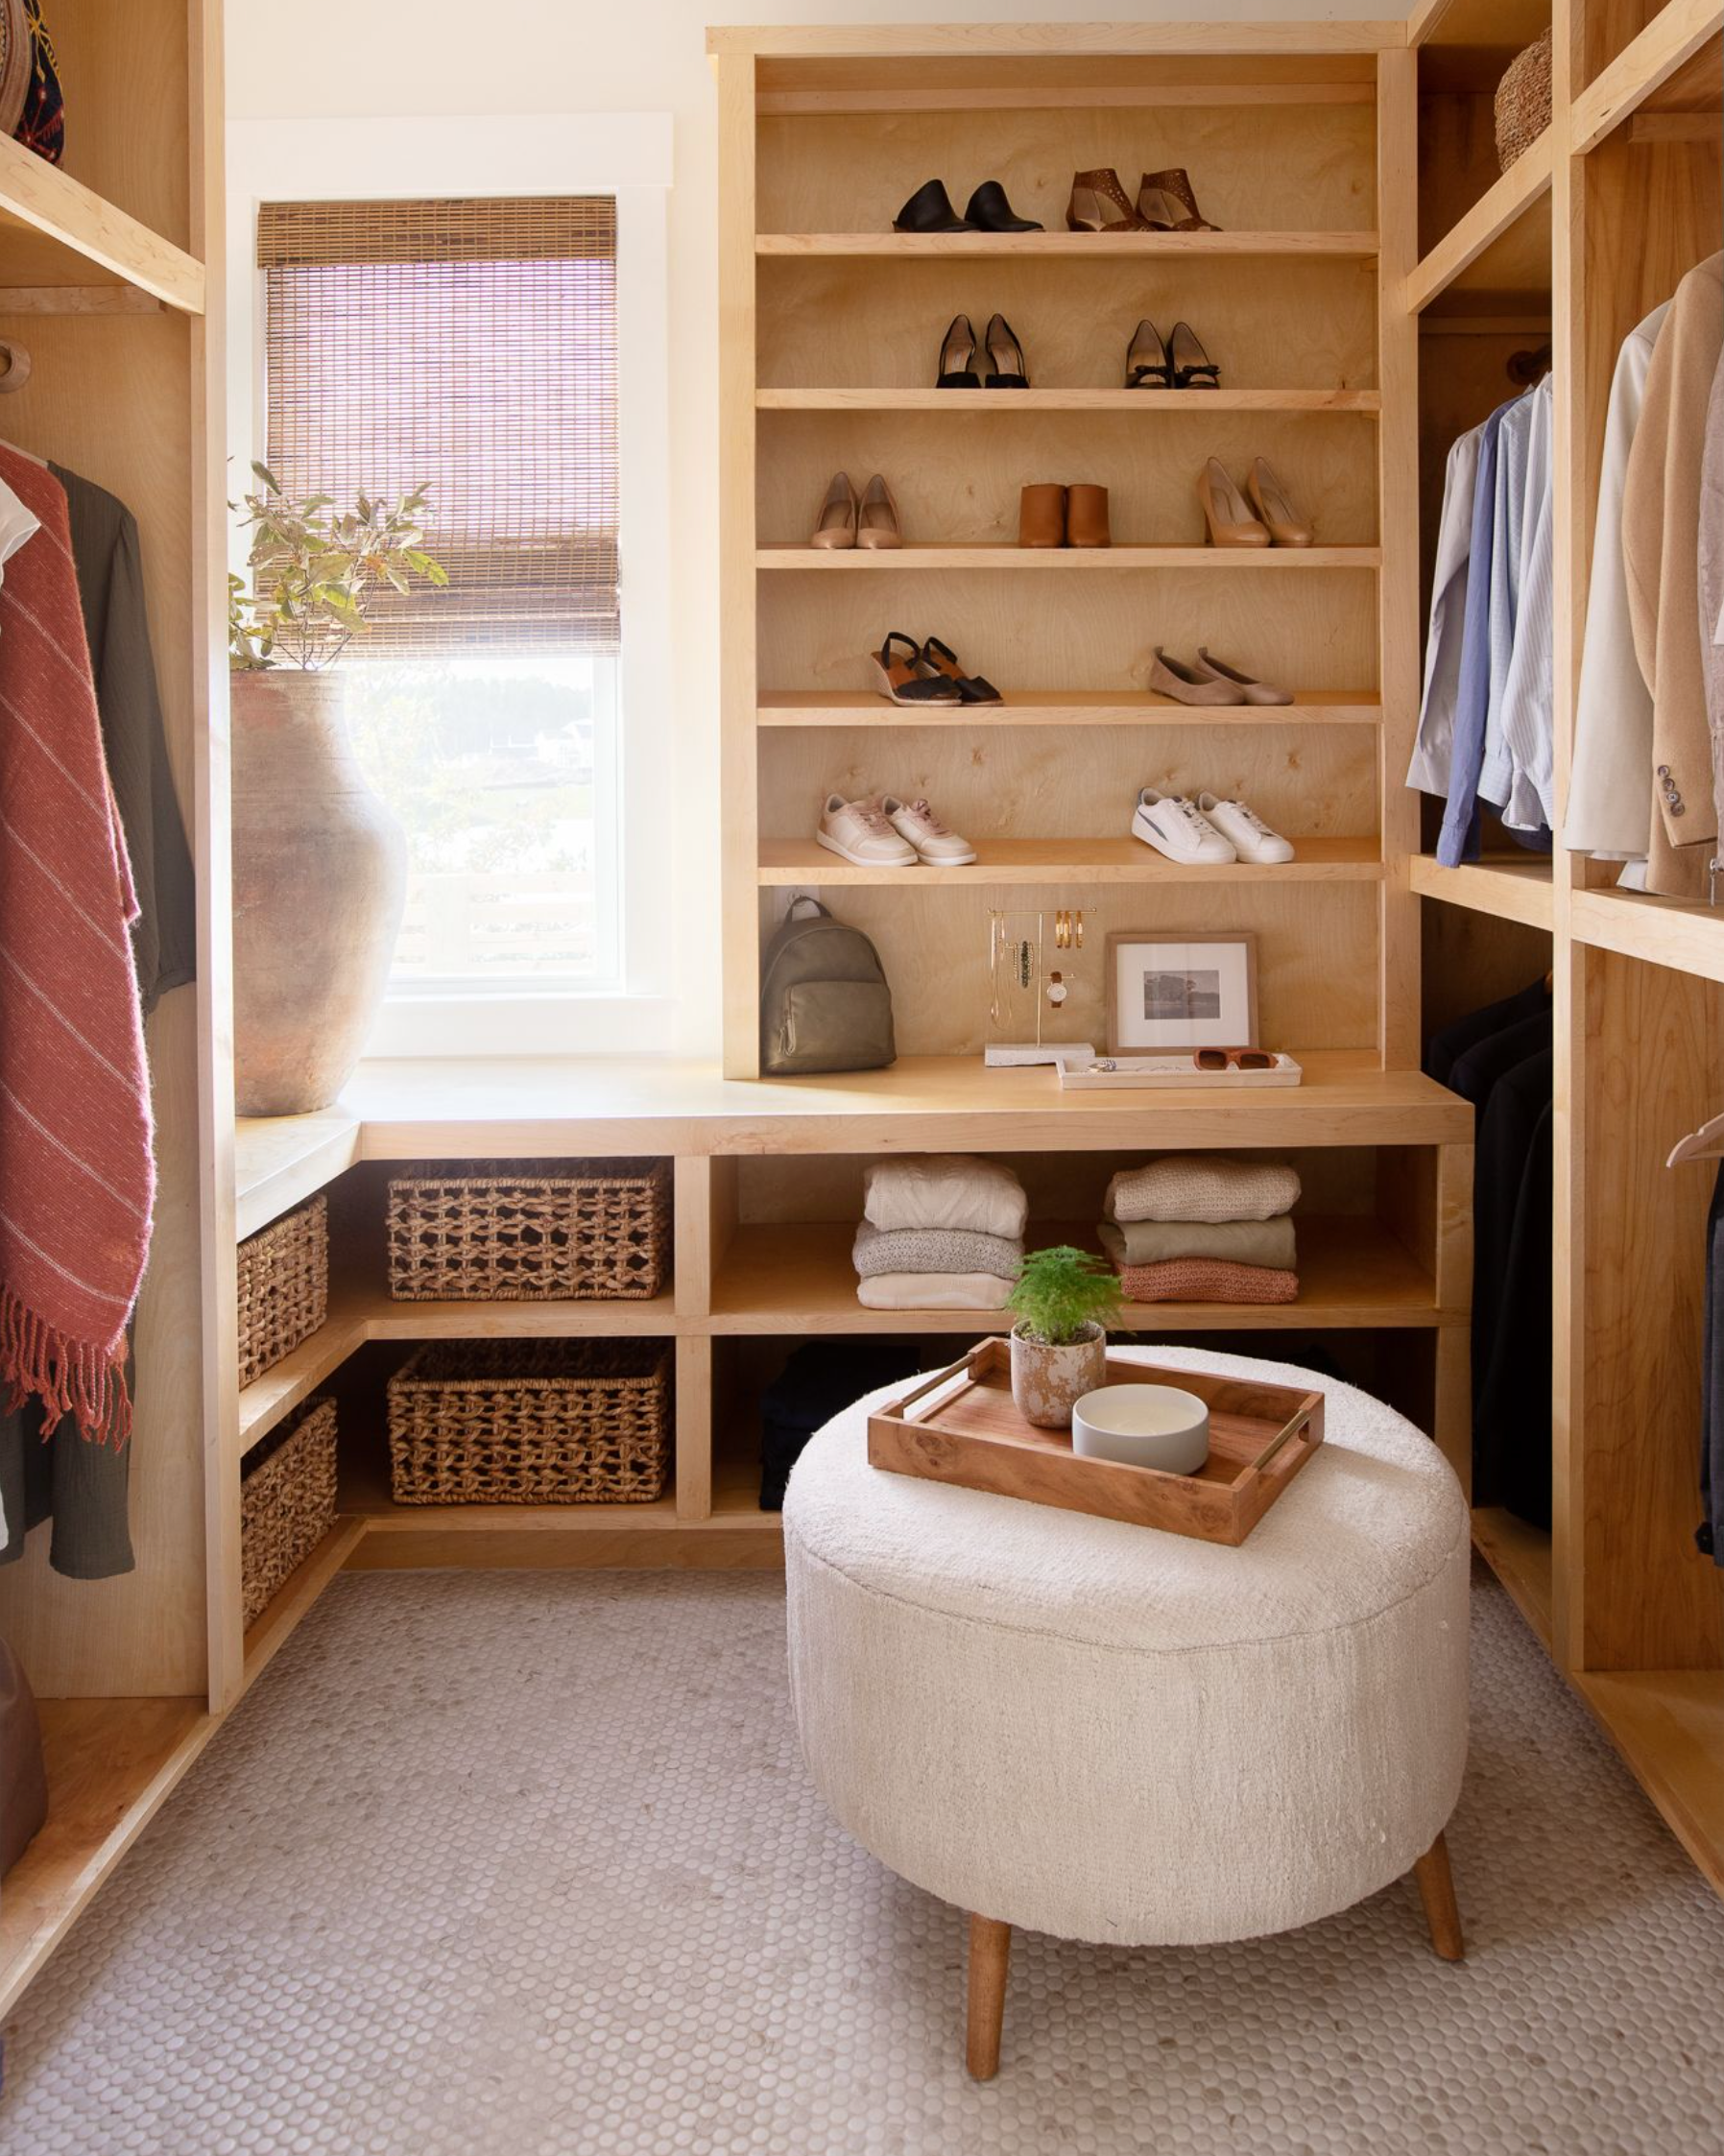 How to: Organize Your Closet